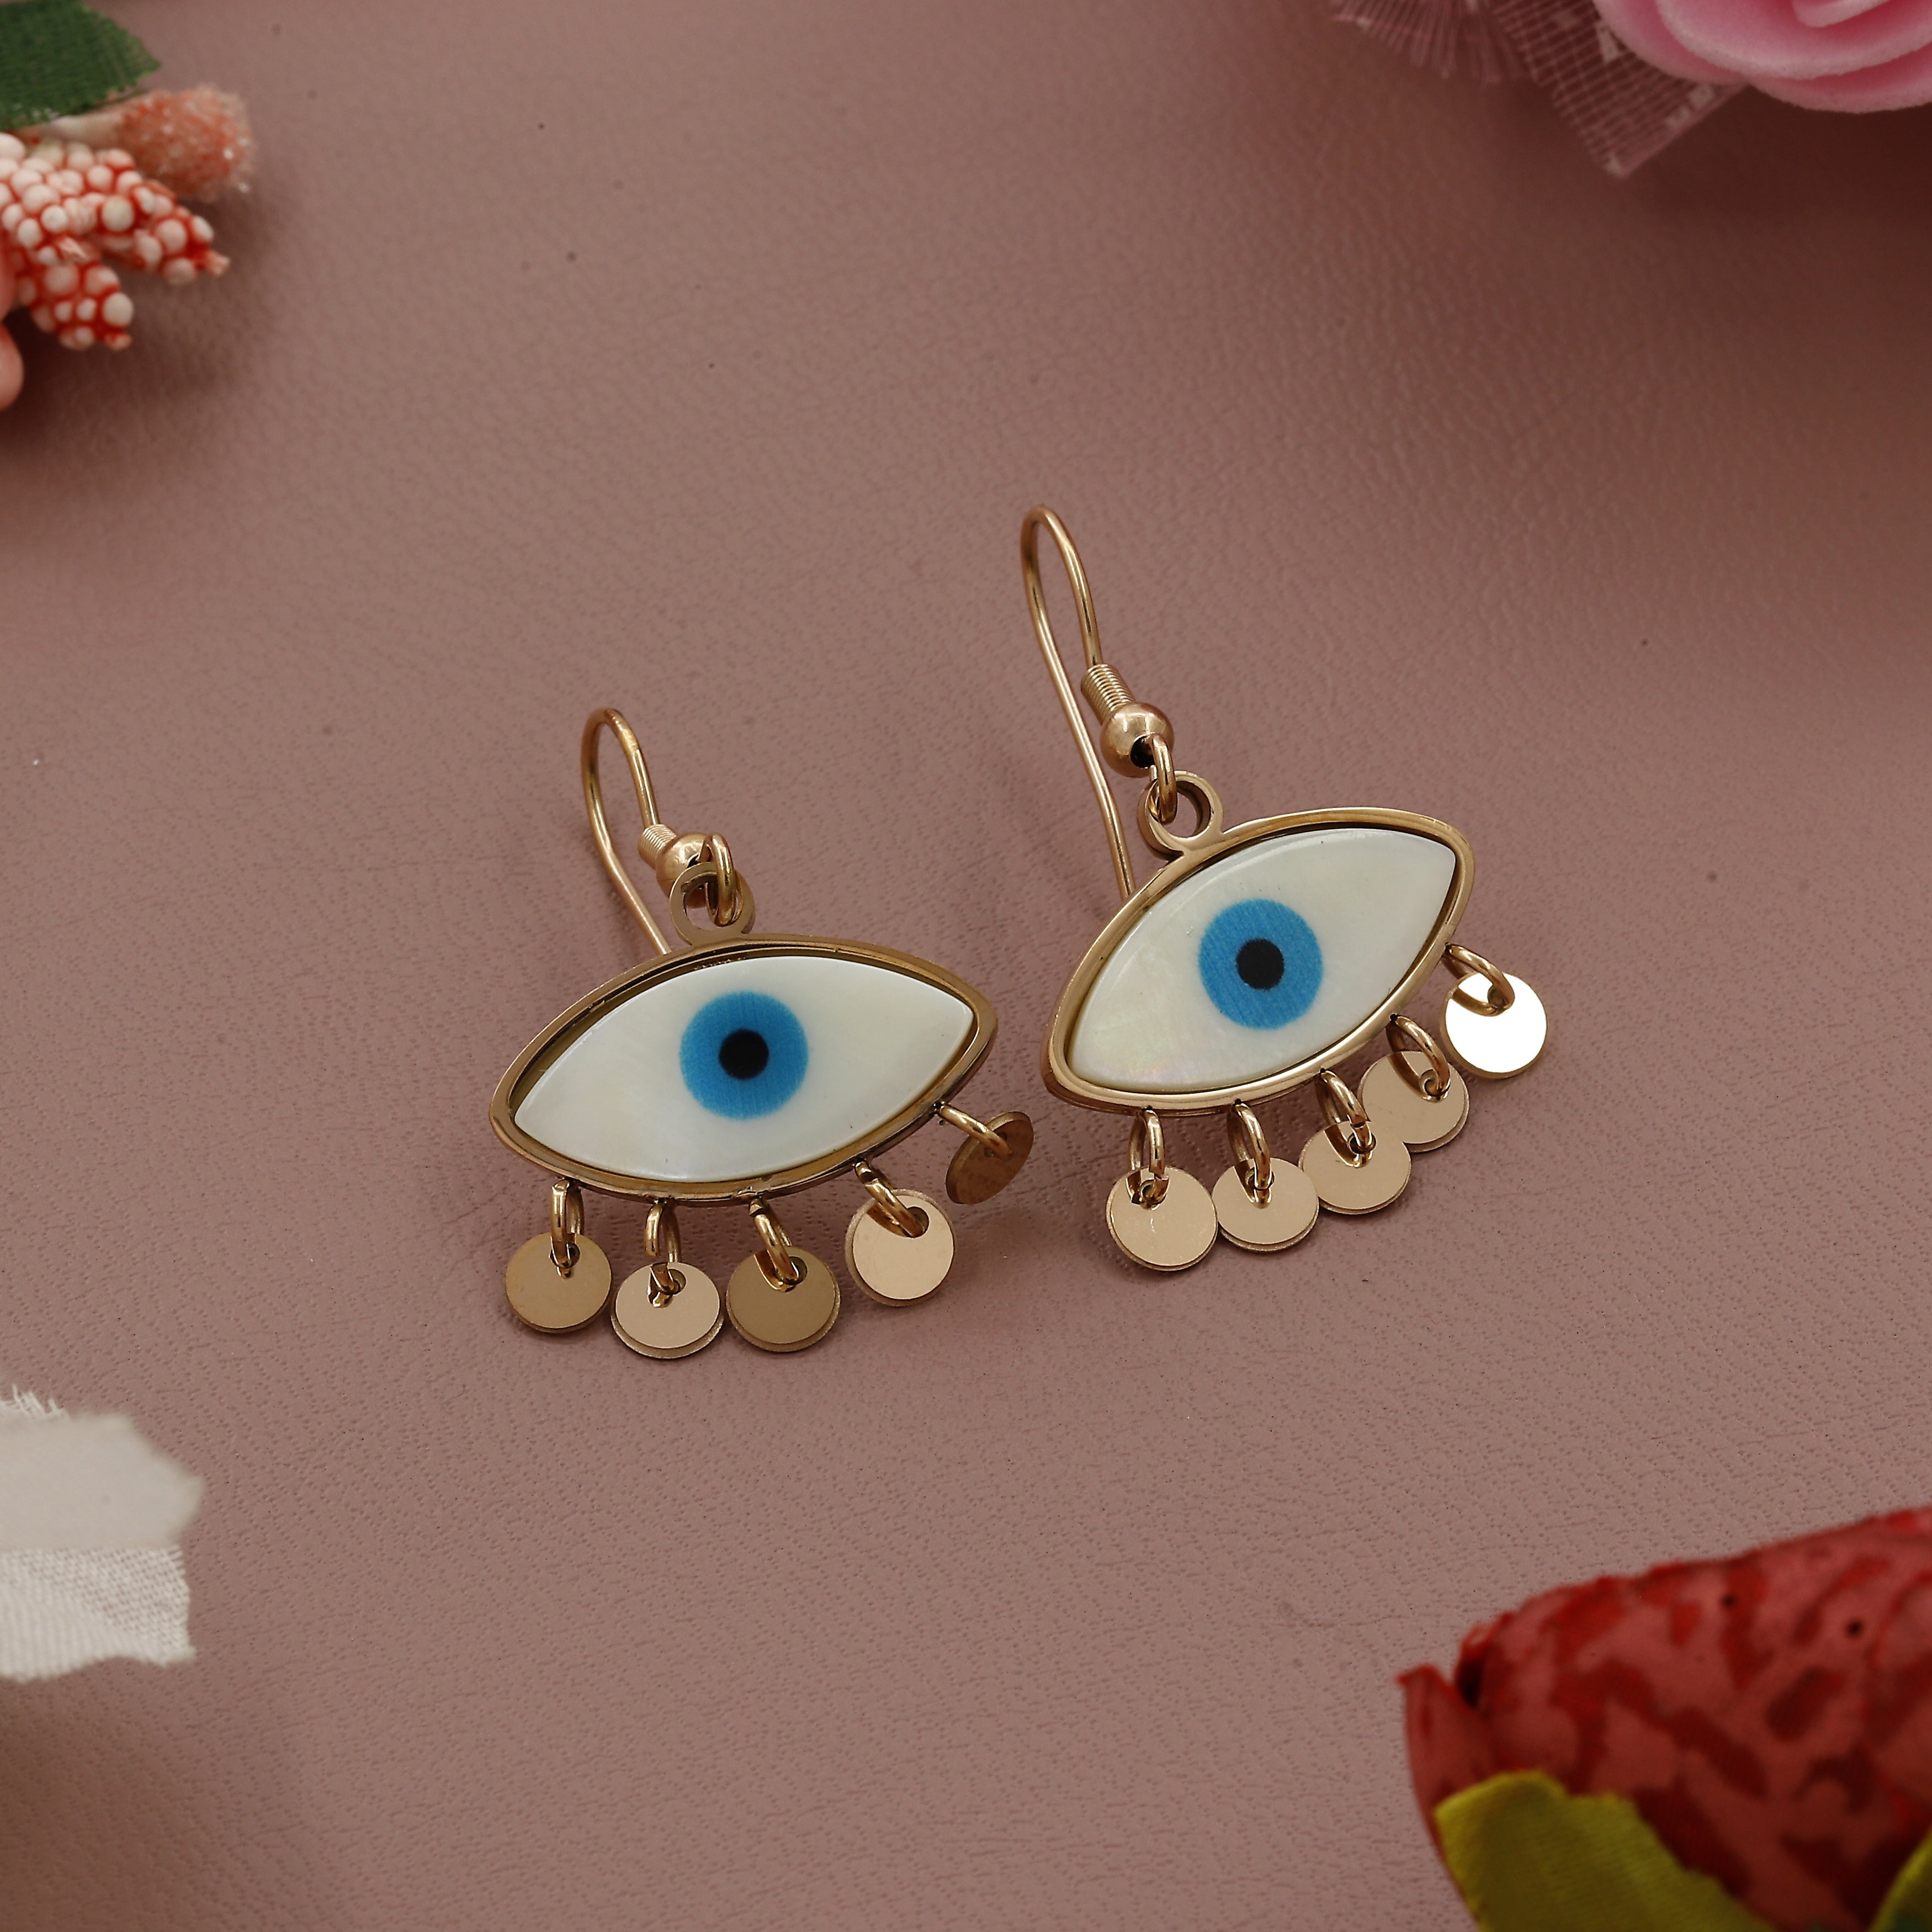 Evileye Gifting Earrings